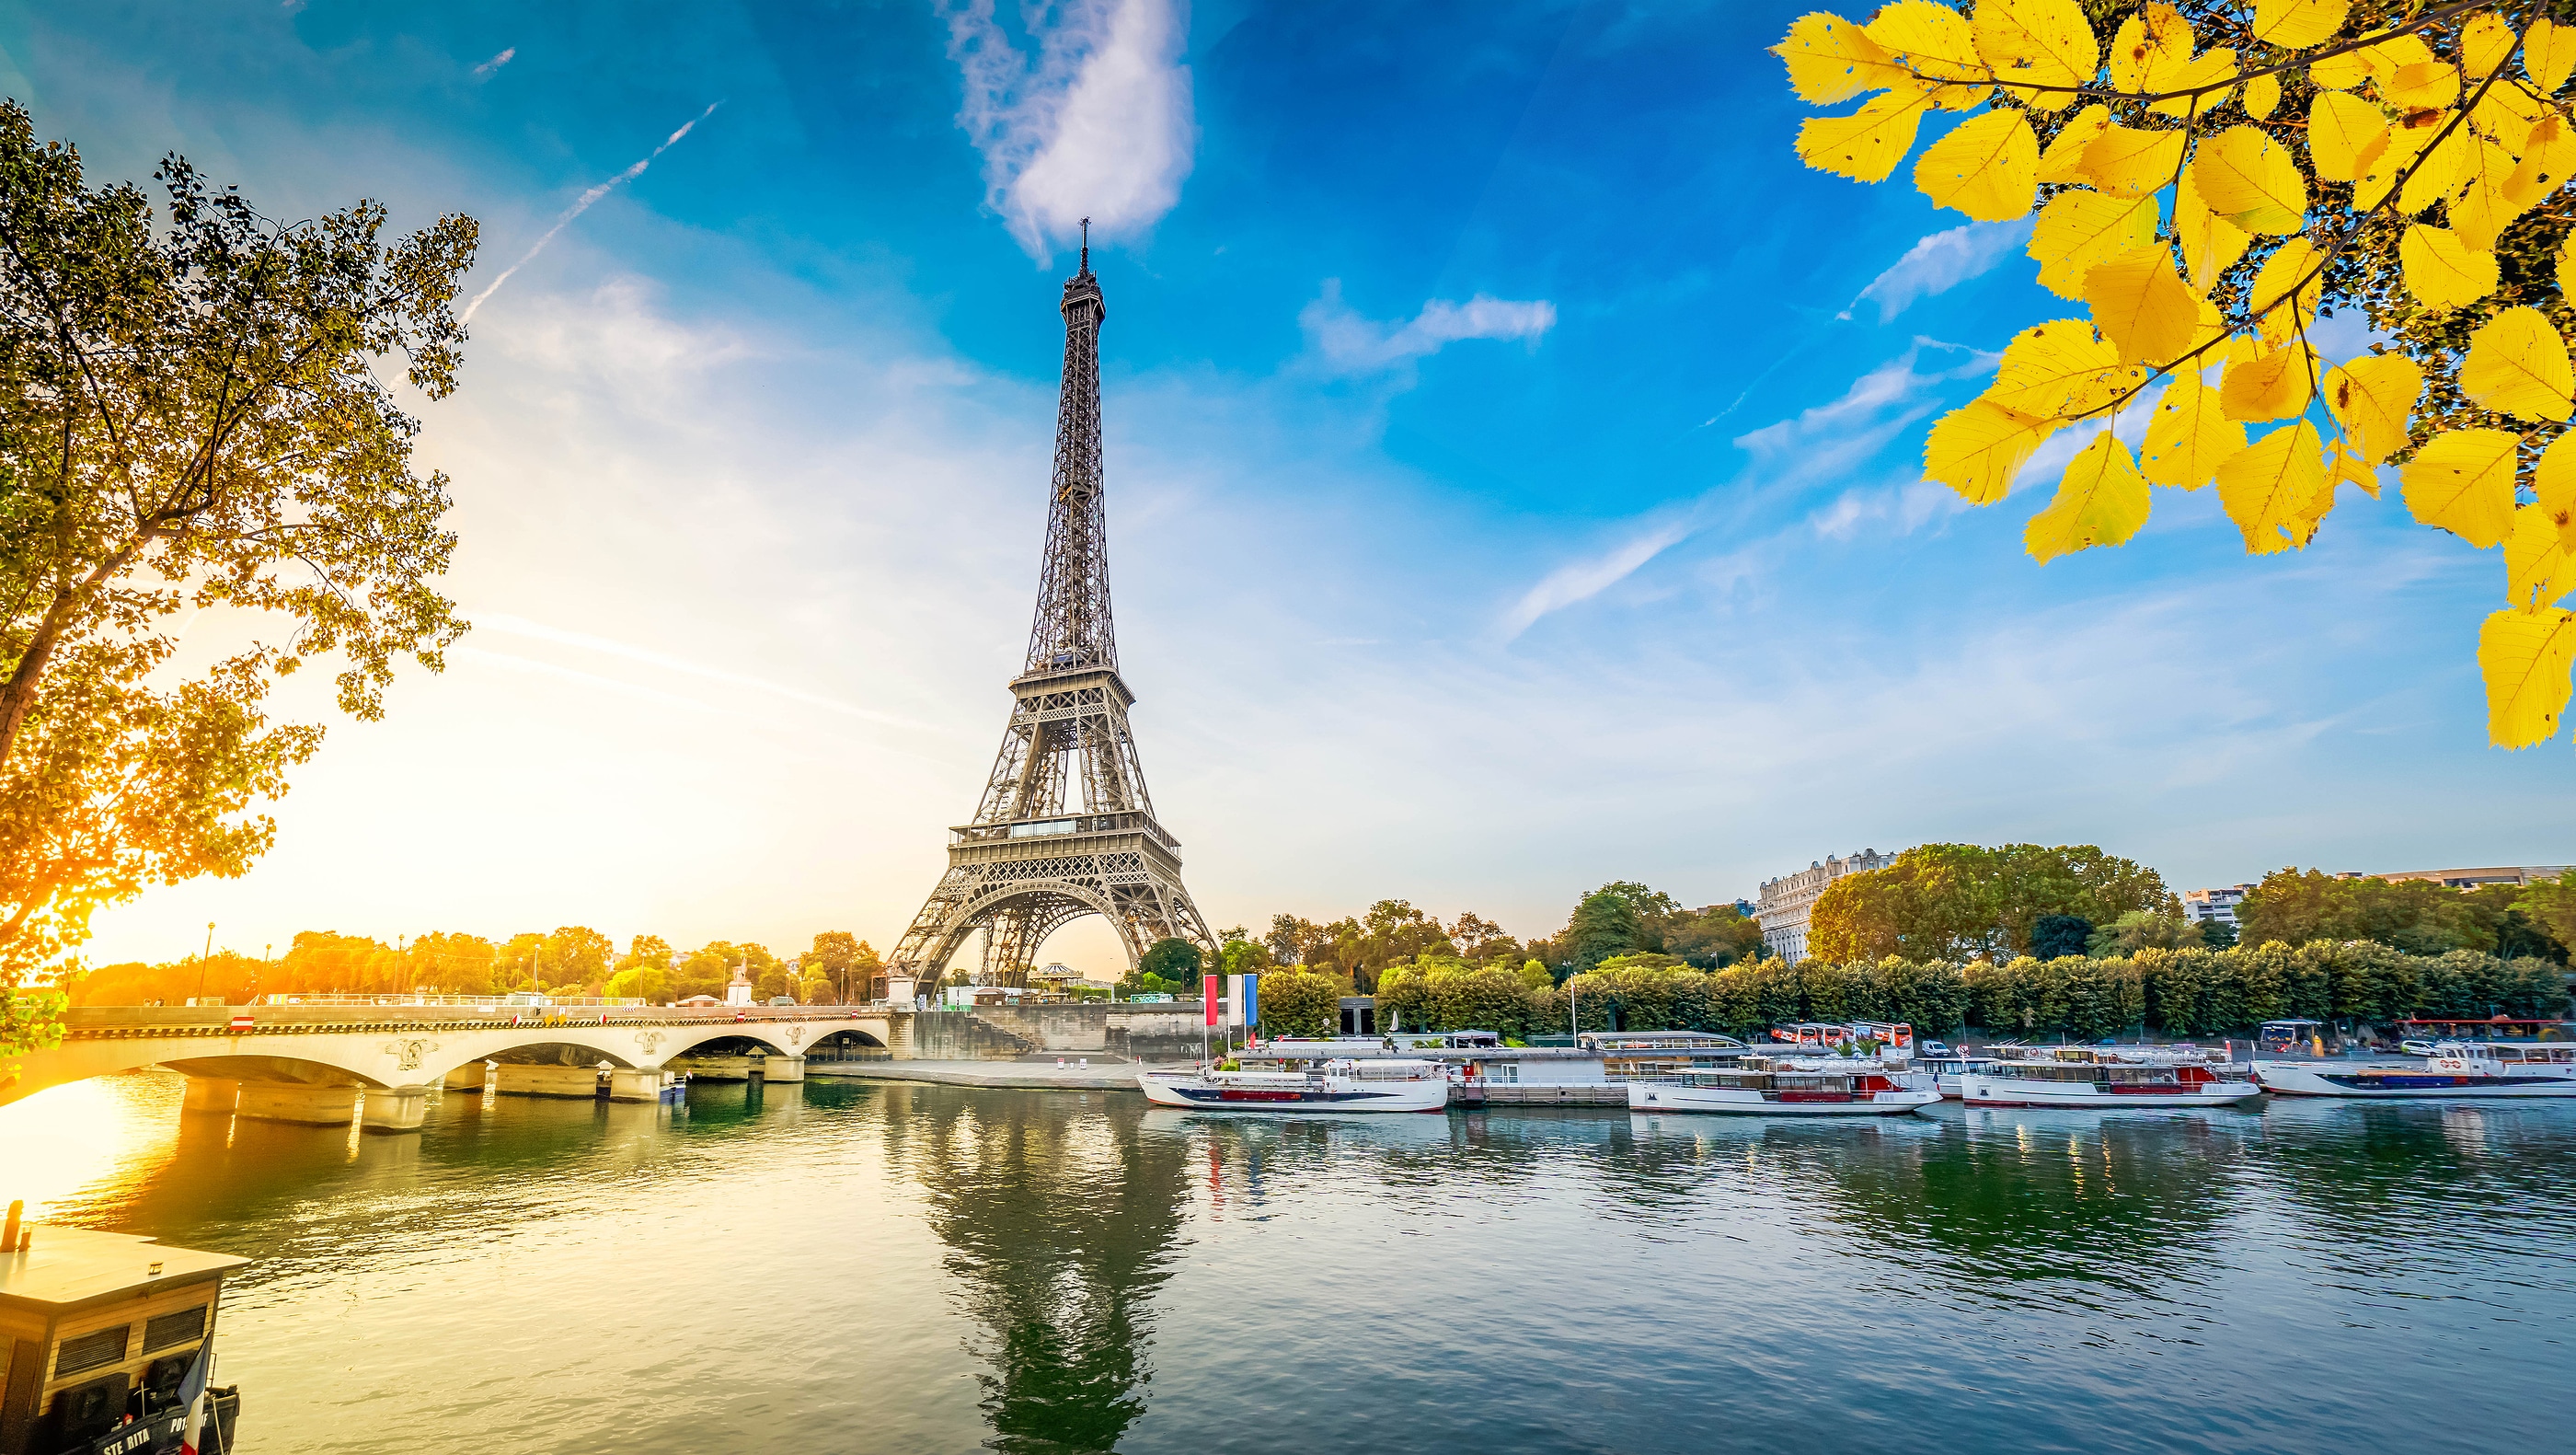 Paris Eiffel Tower and river Seine